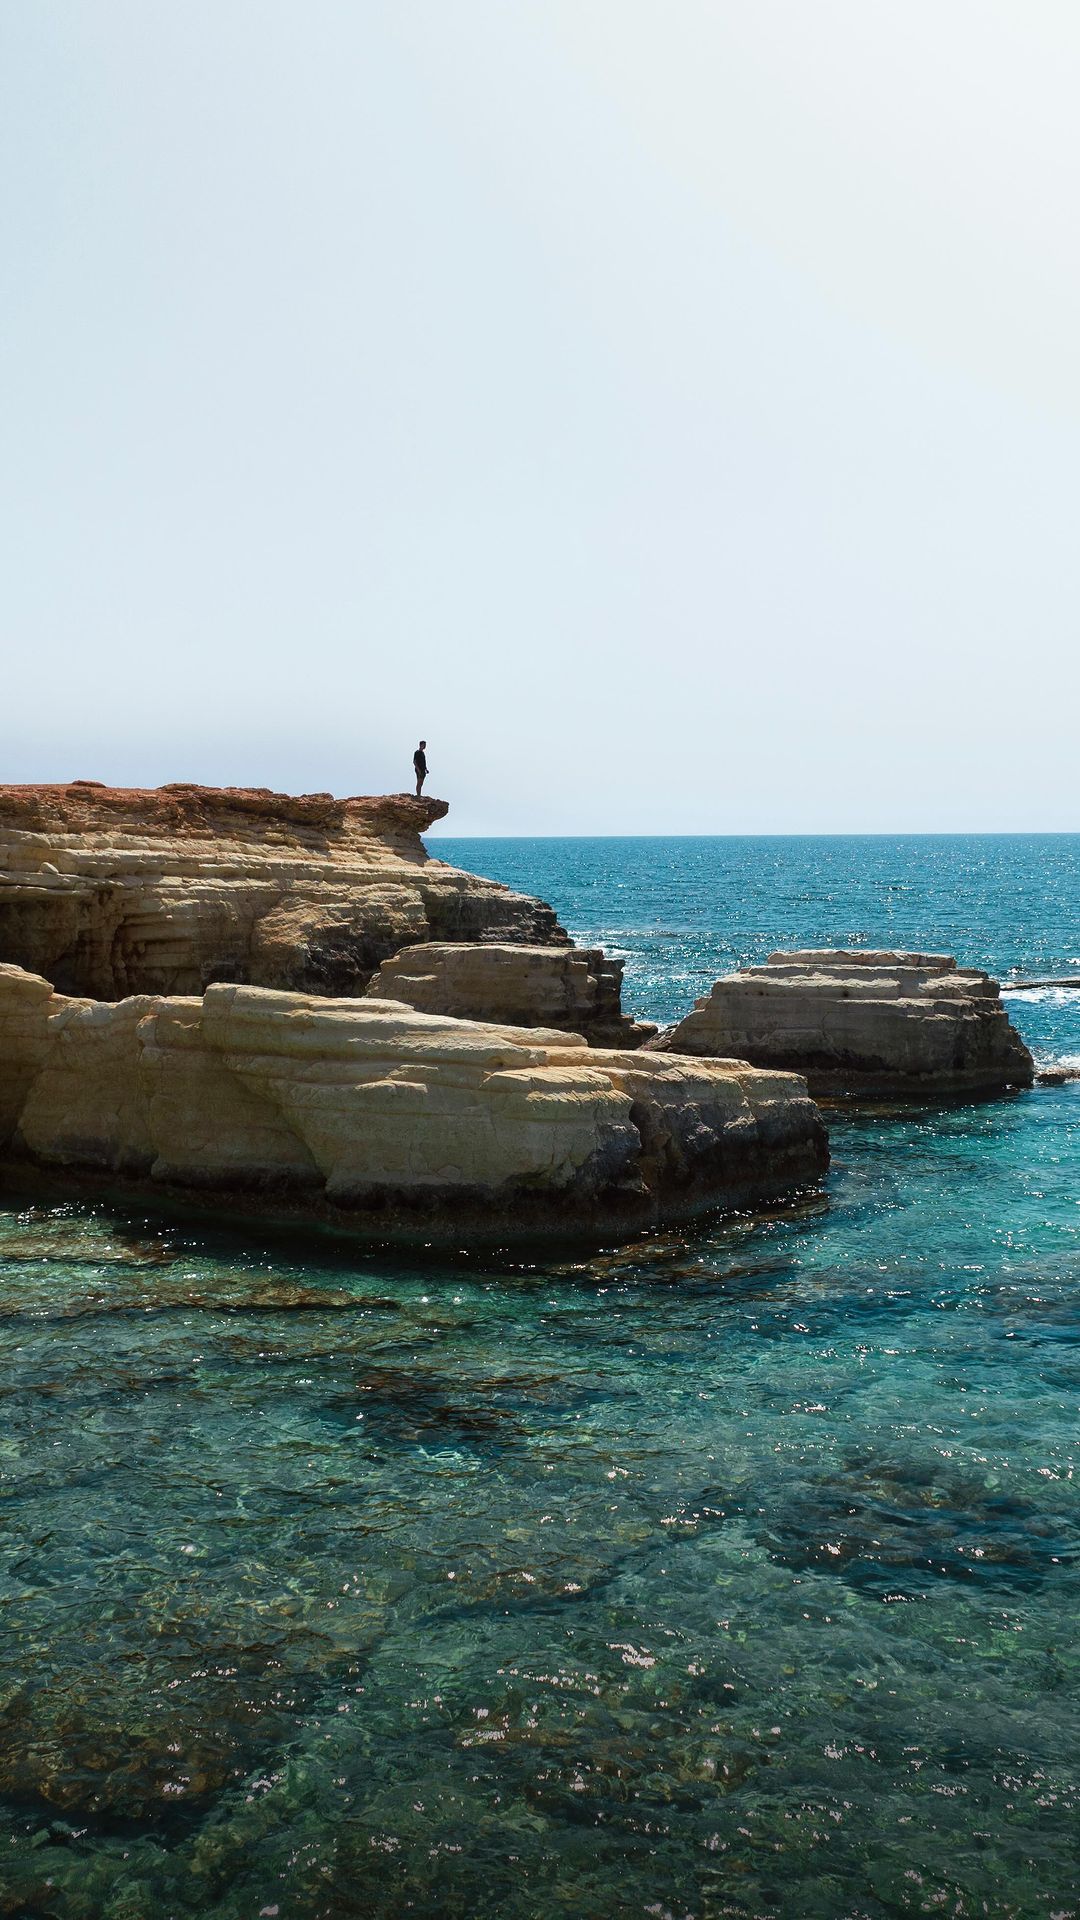 Exploring Cyprus: 5 Days of Adventure